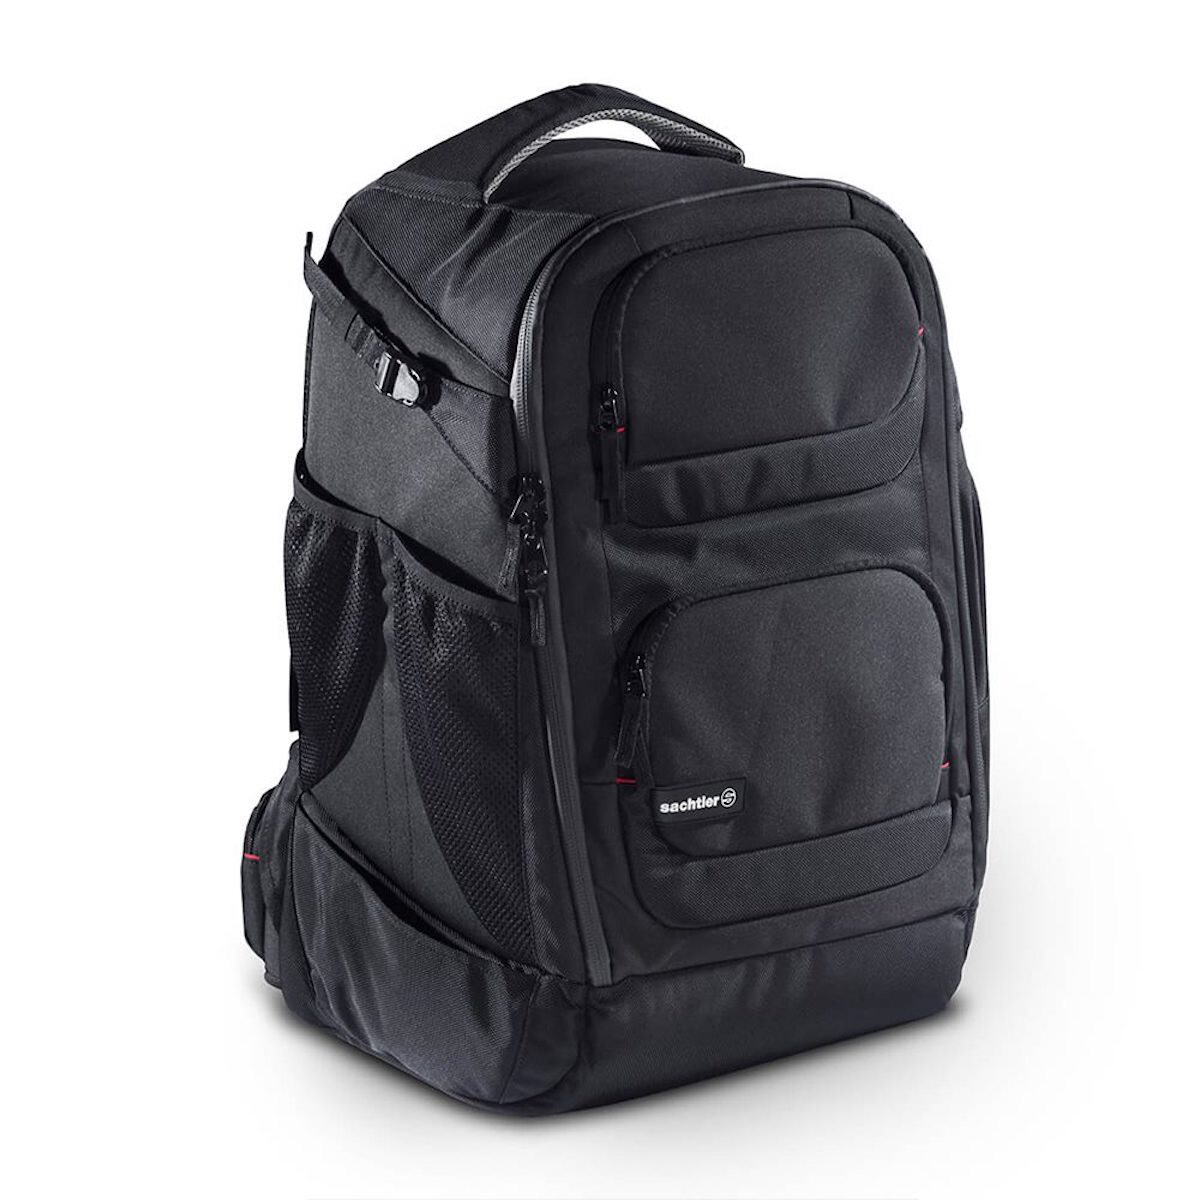 Sachtler Bags Compack Plus Rucksack